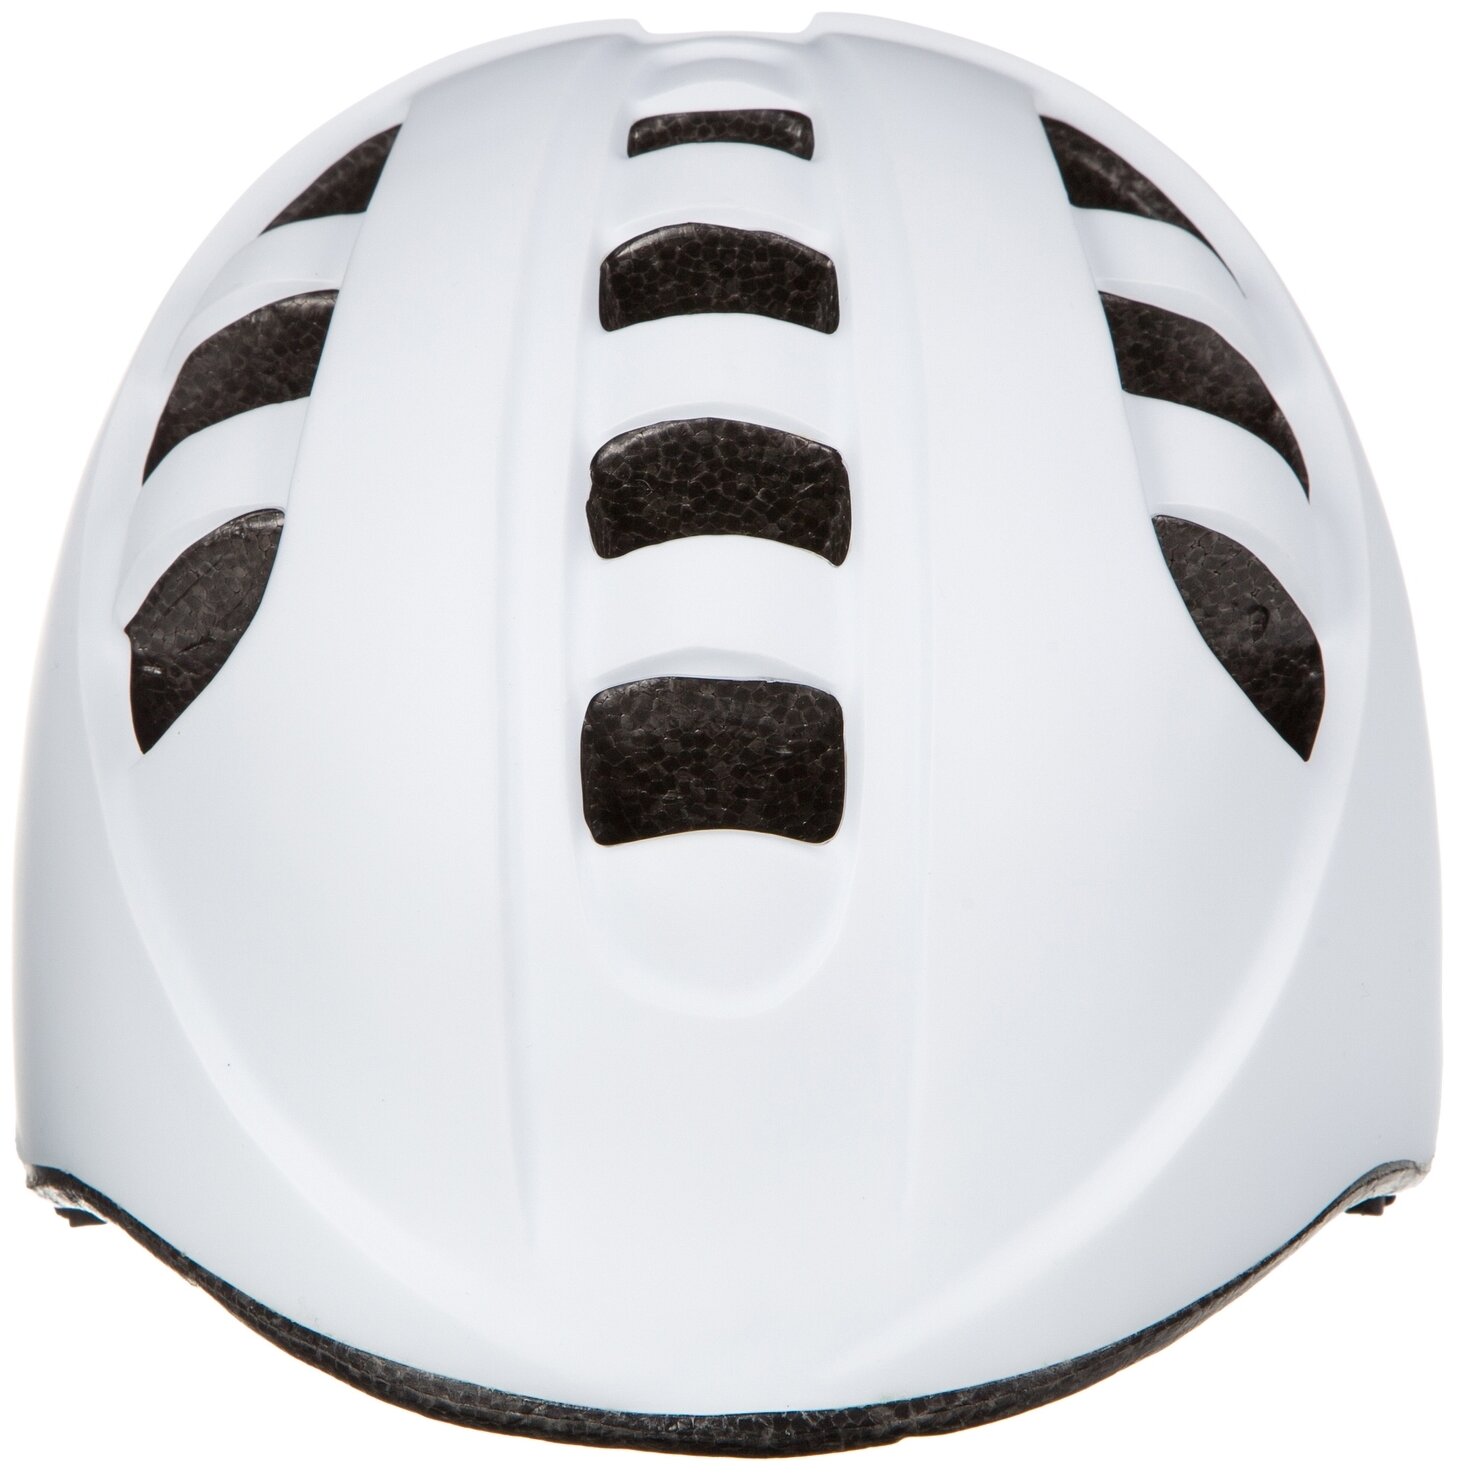 Шлем STG , модель MA-2-W , размер S(48-52)cm белый, с фикс застежкой. C Фонариком в застежке